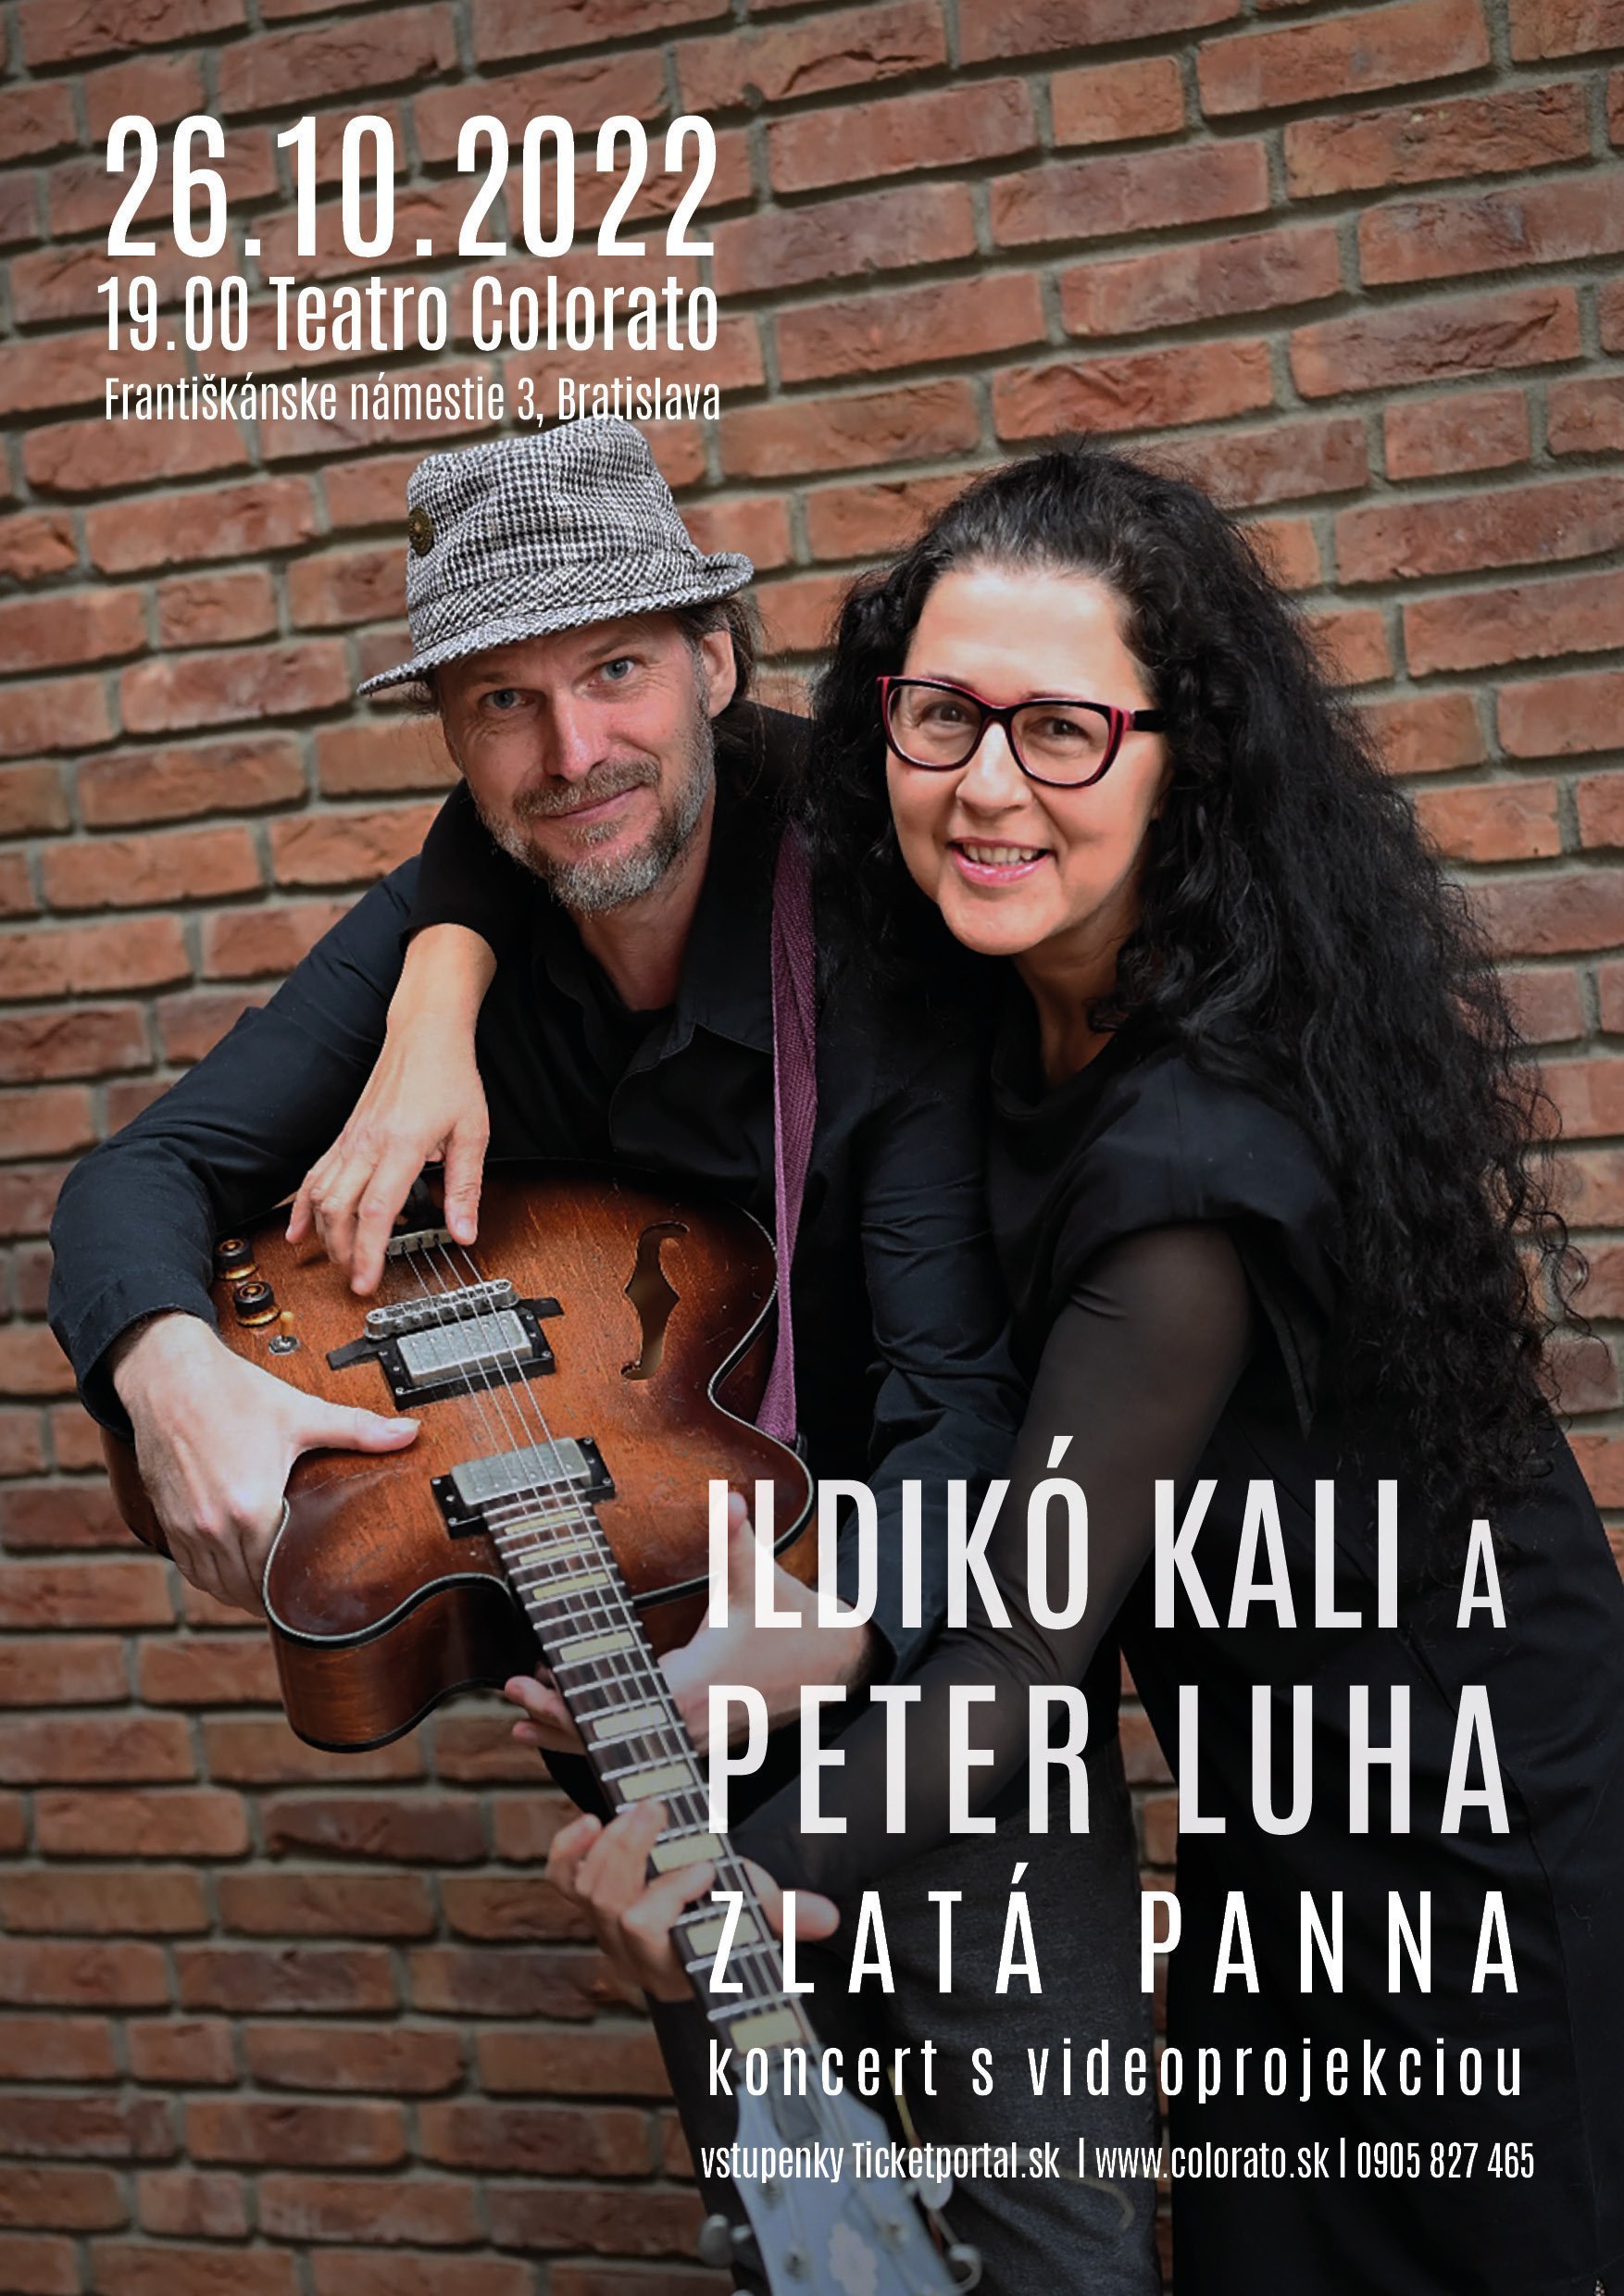 Concert of Ildikó Kali and Petr Luha